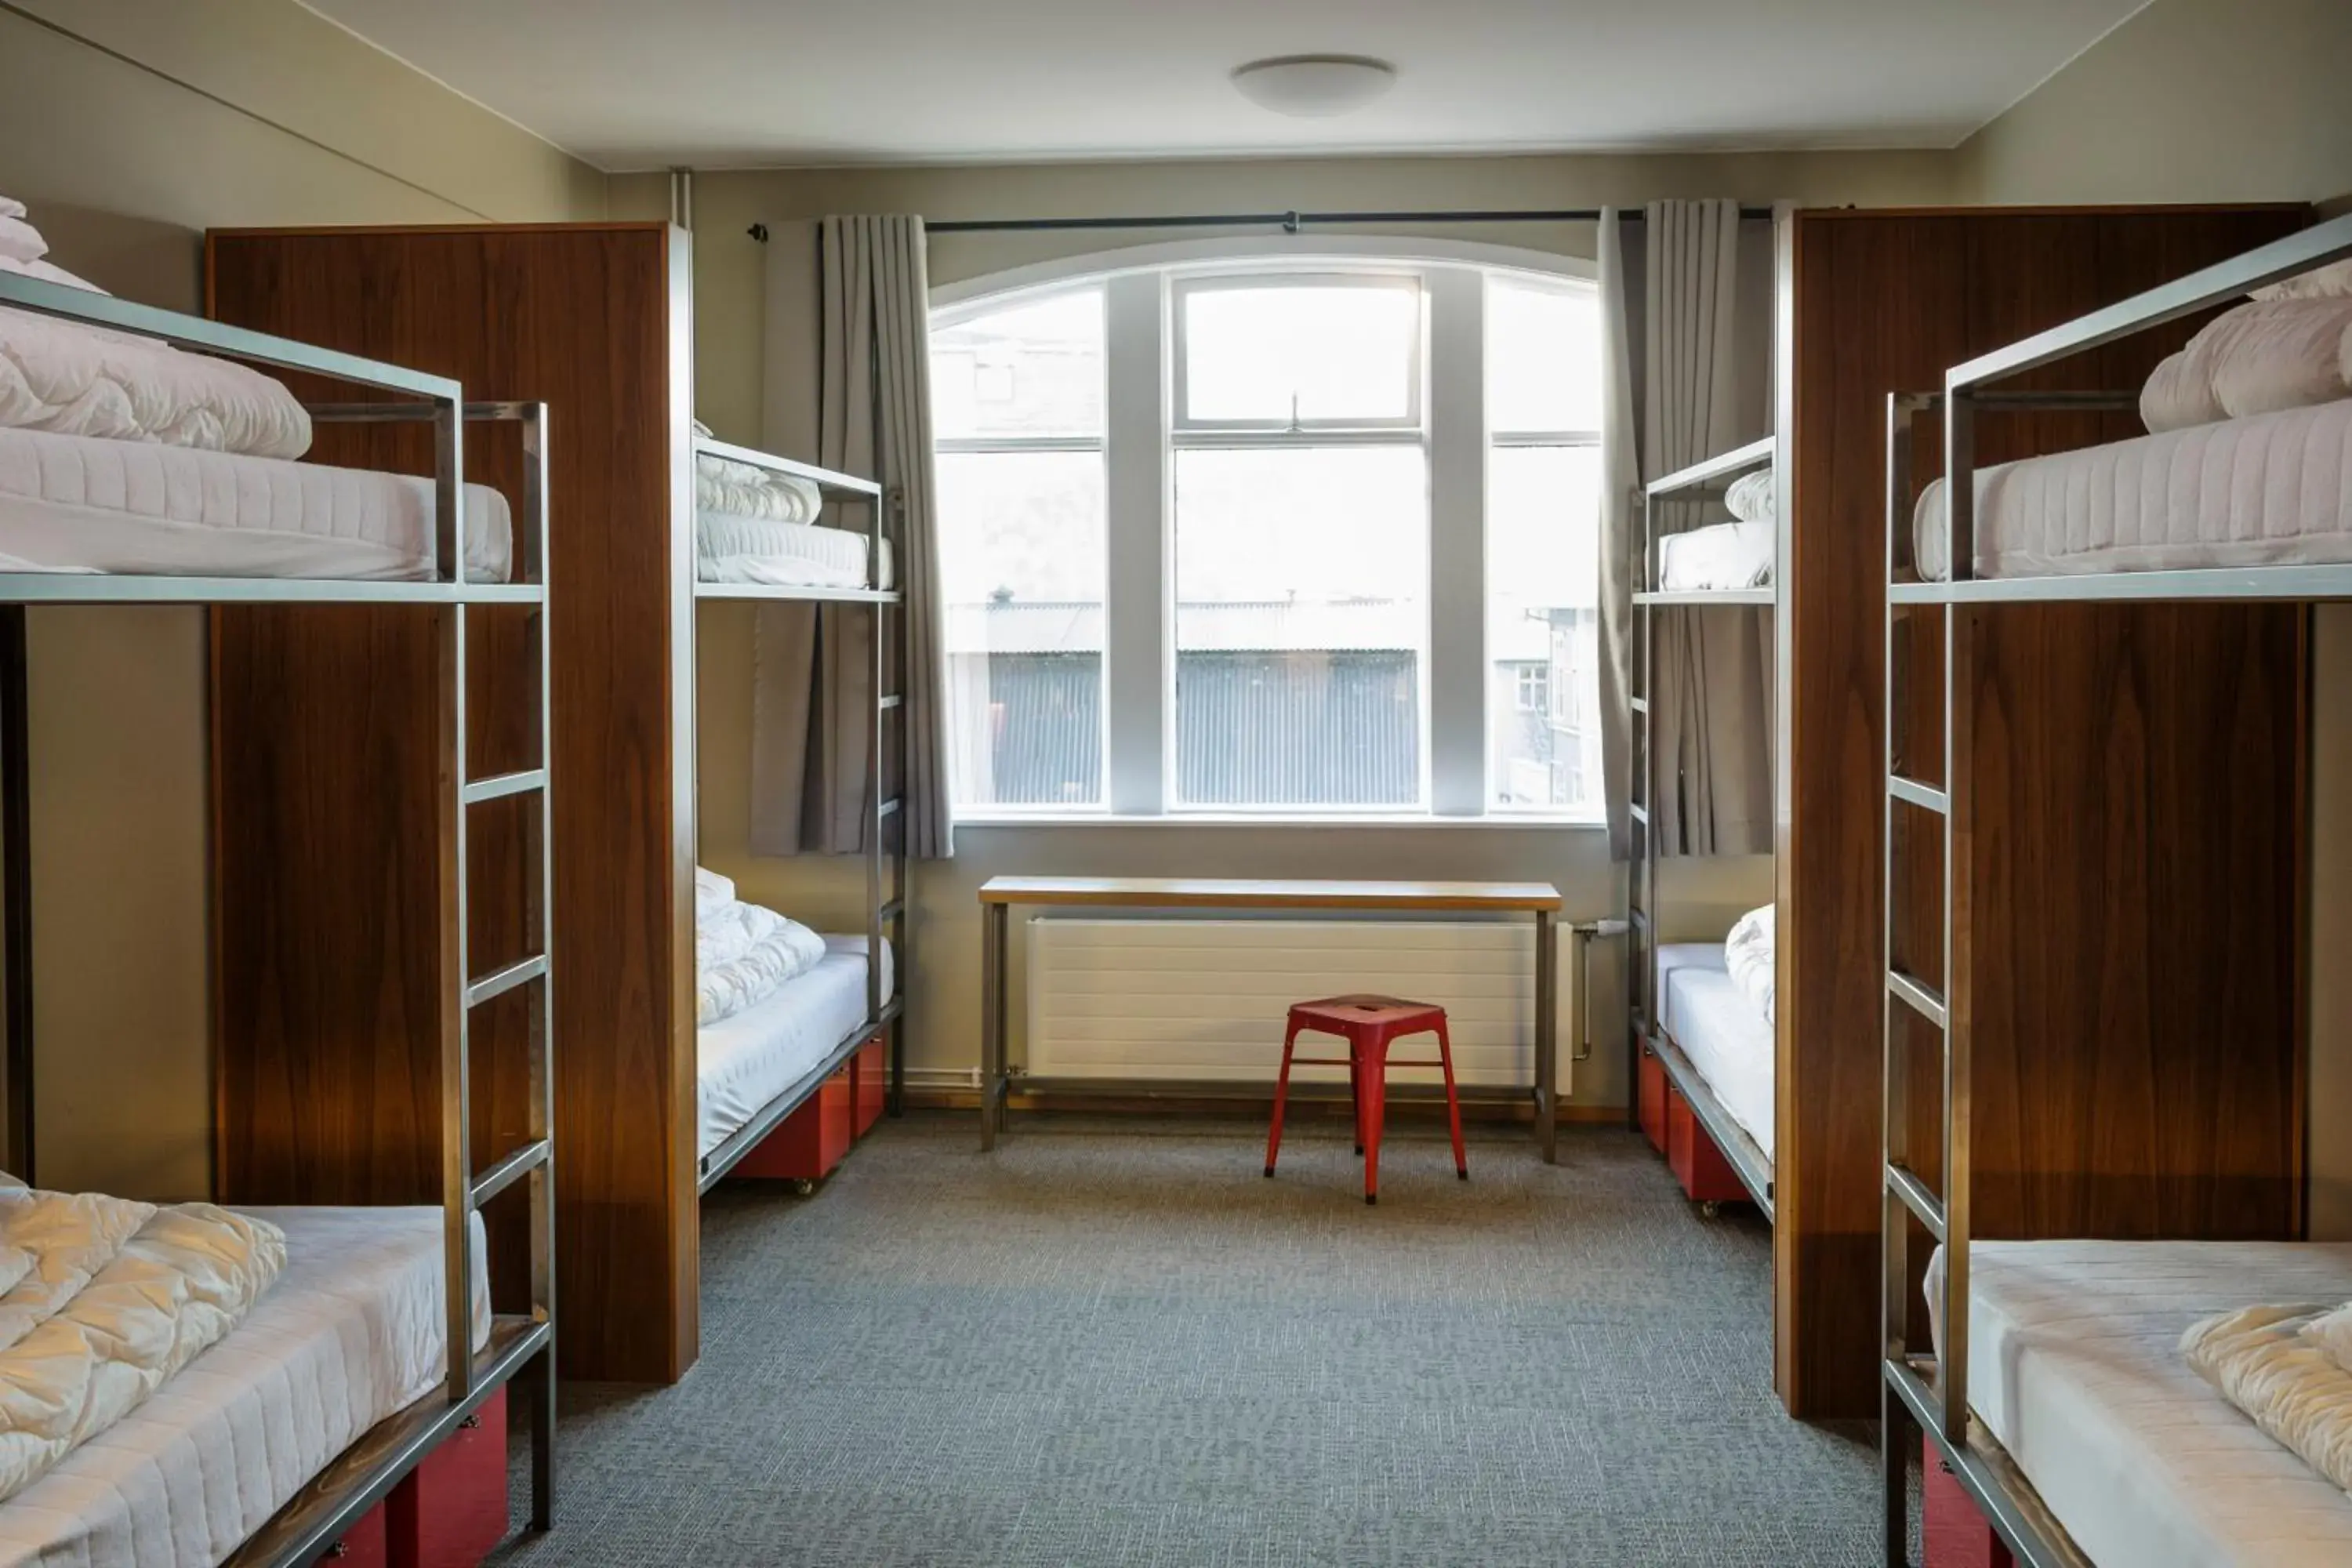 Bedroom, Bunk Bed in Loft - HI Hostel